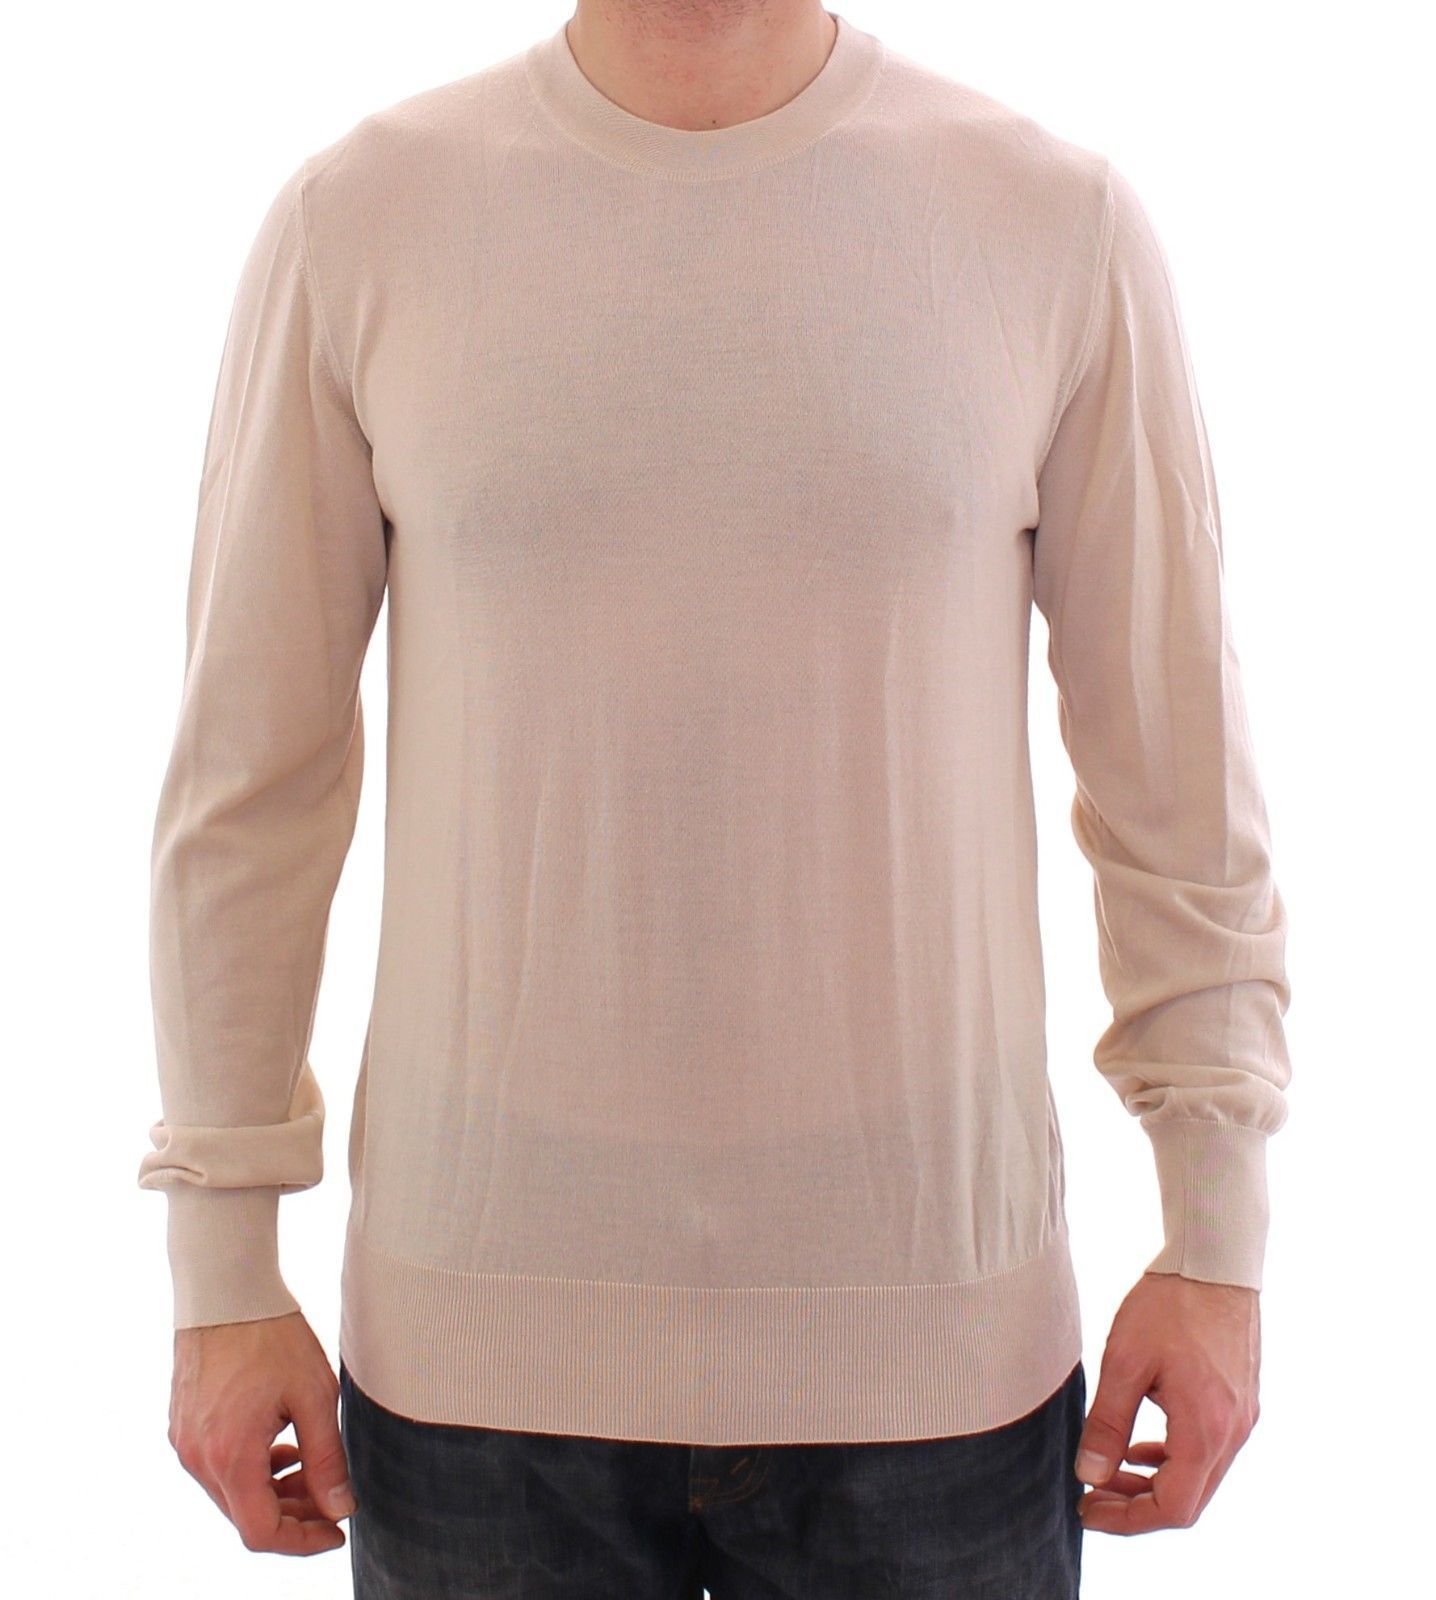 Beige Cashmere Crew-neck Sweater Pullover Top - Fashion